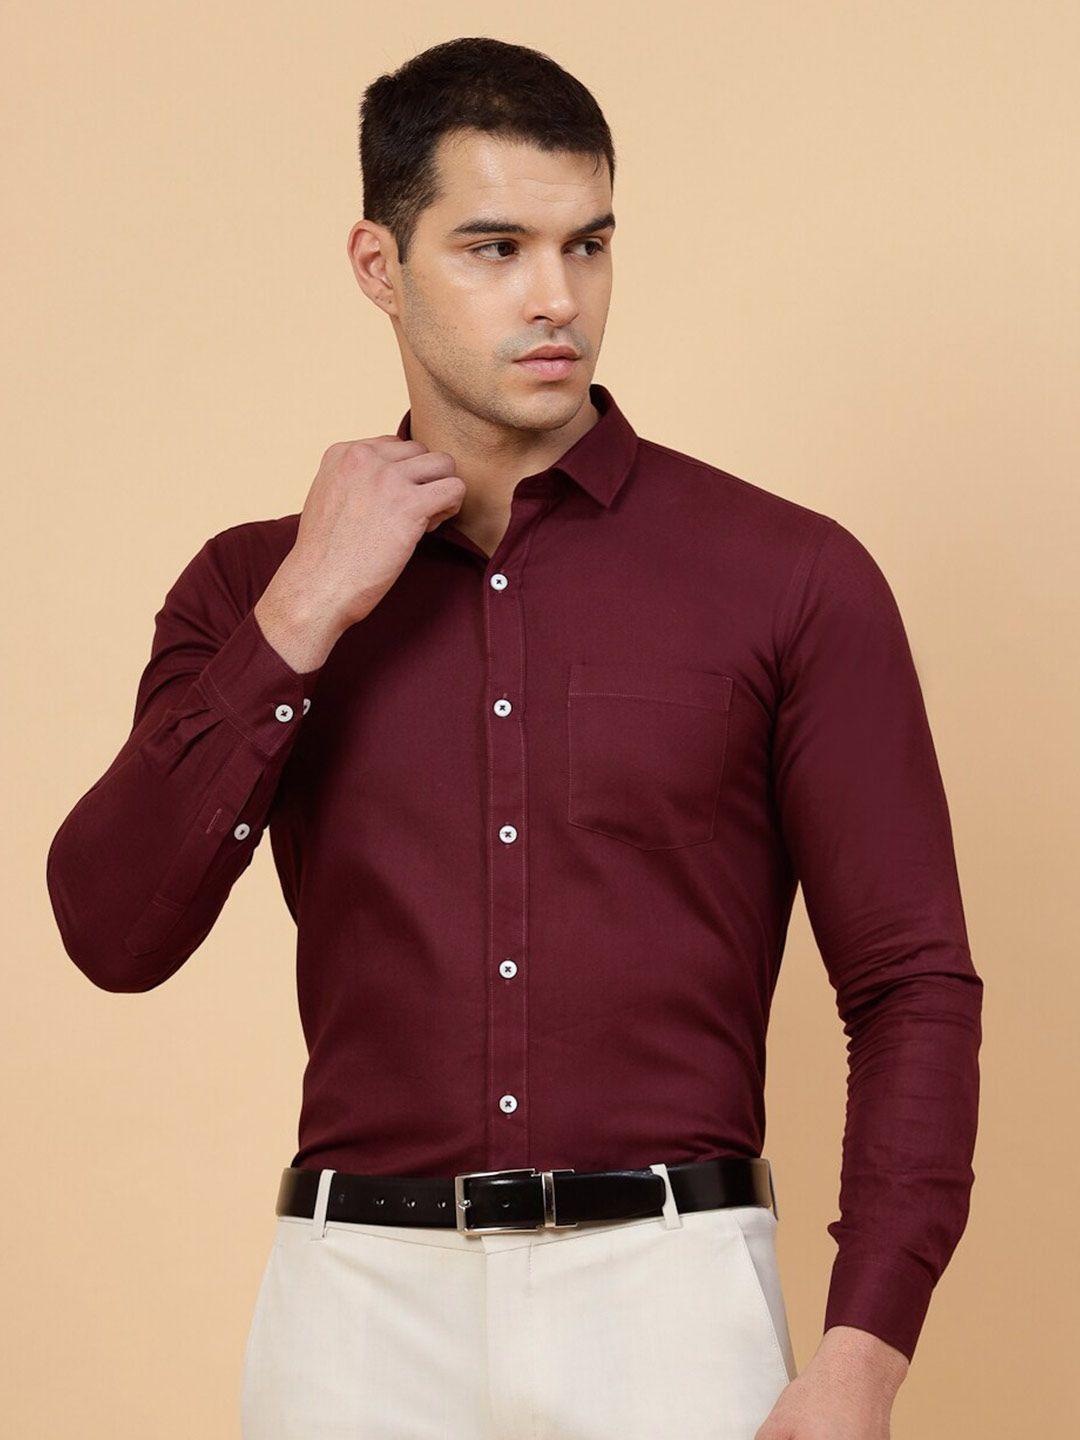 jadeberry standard cotton formal shirt